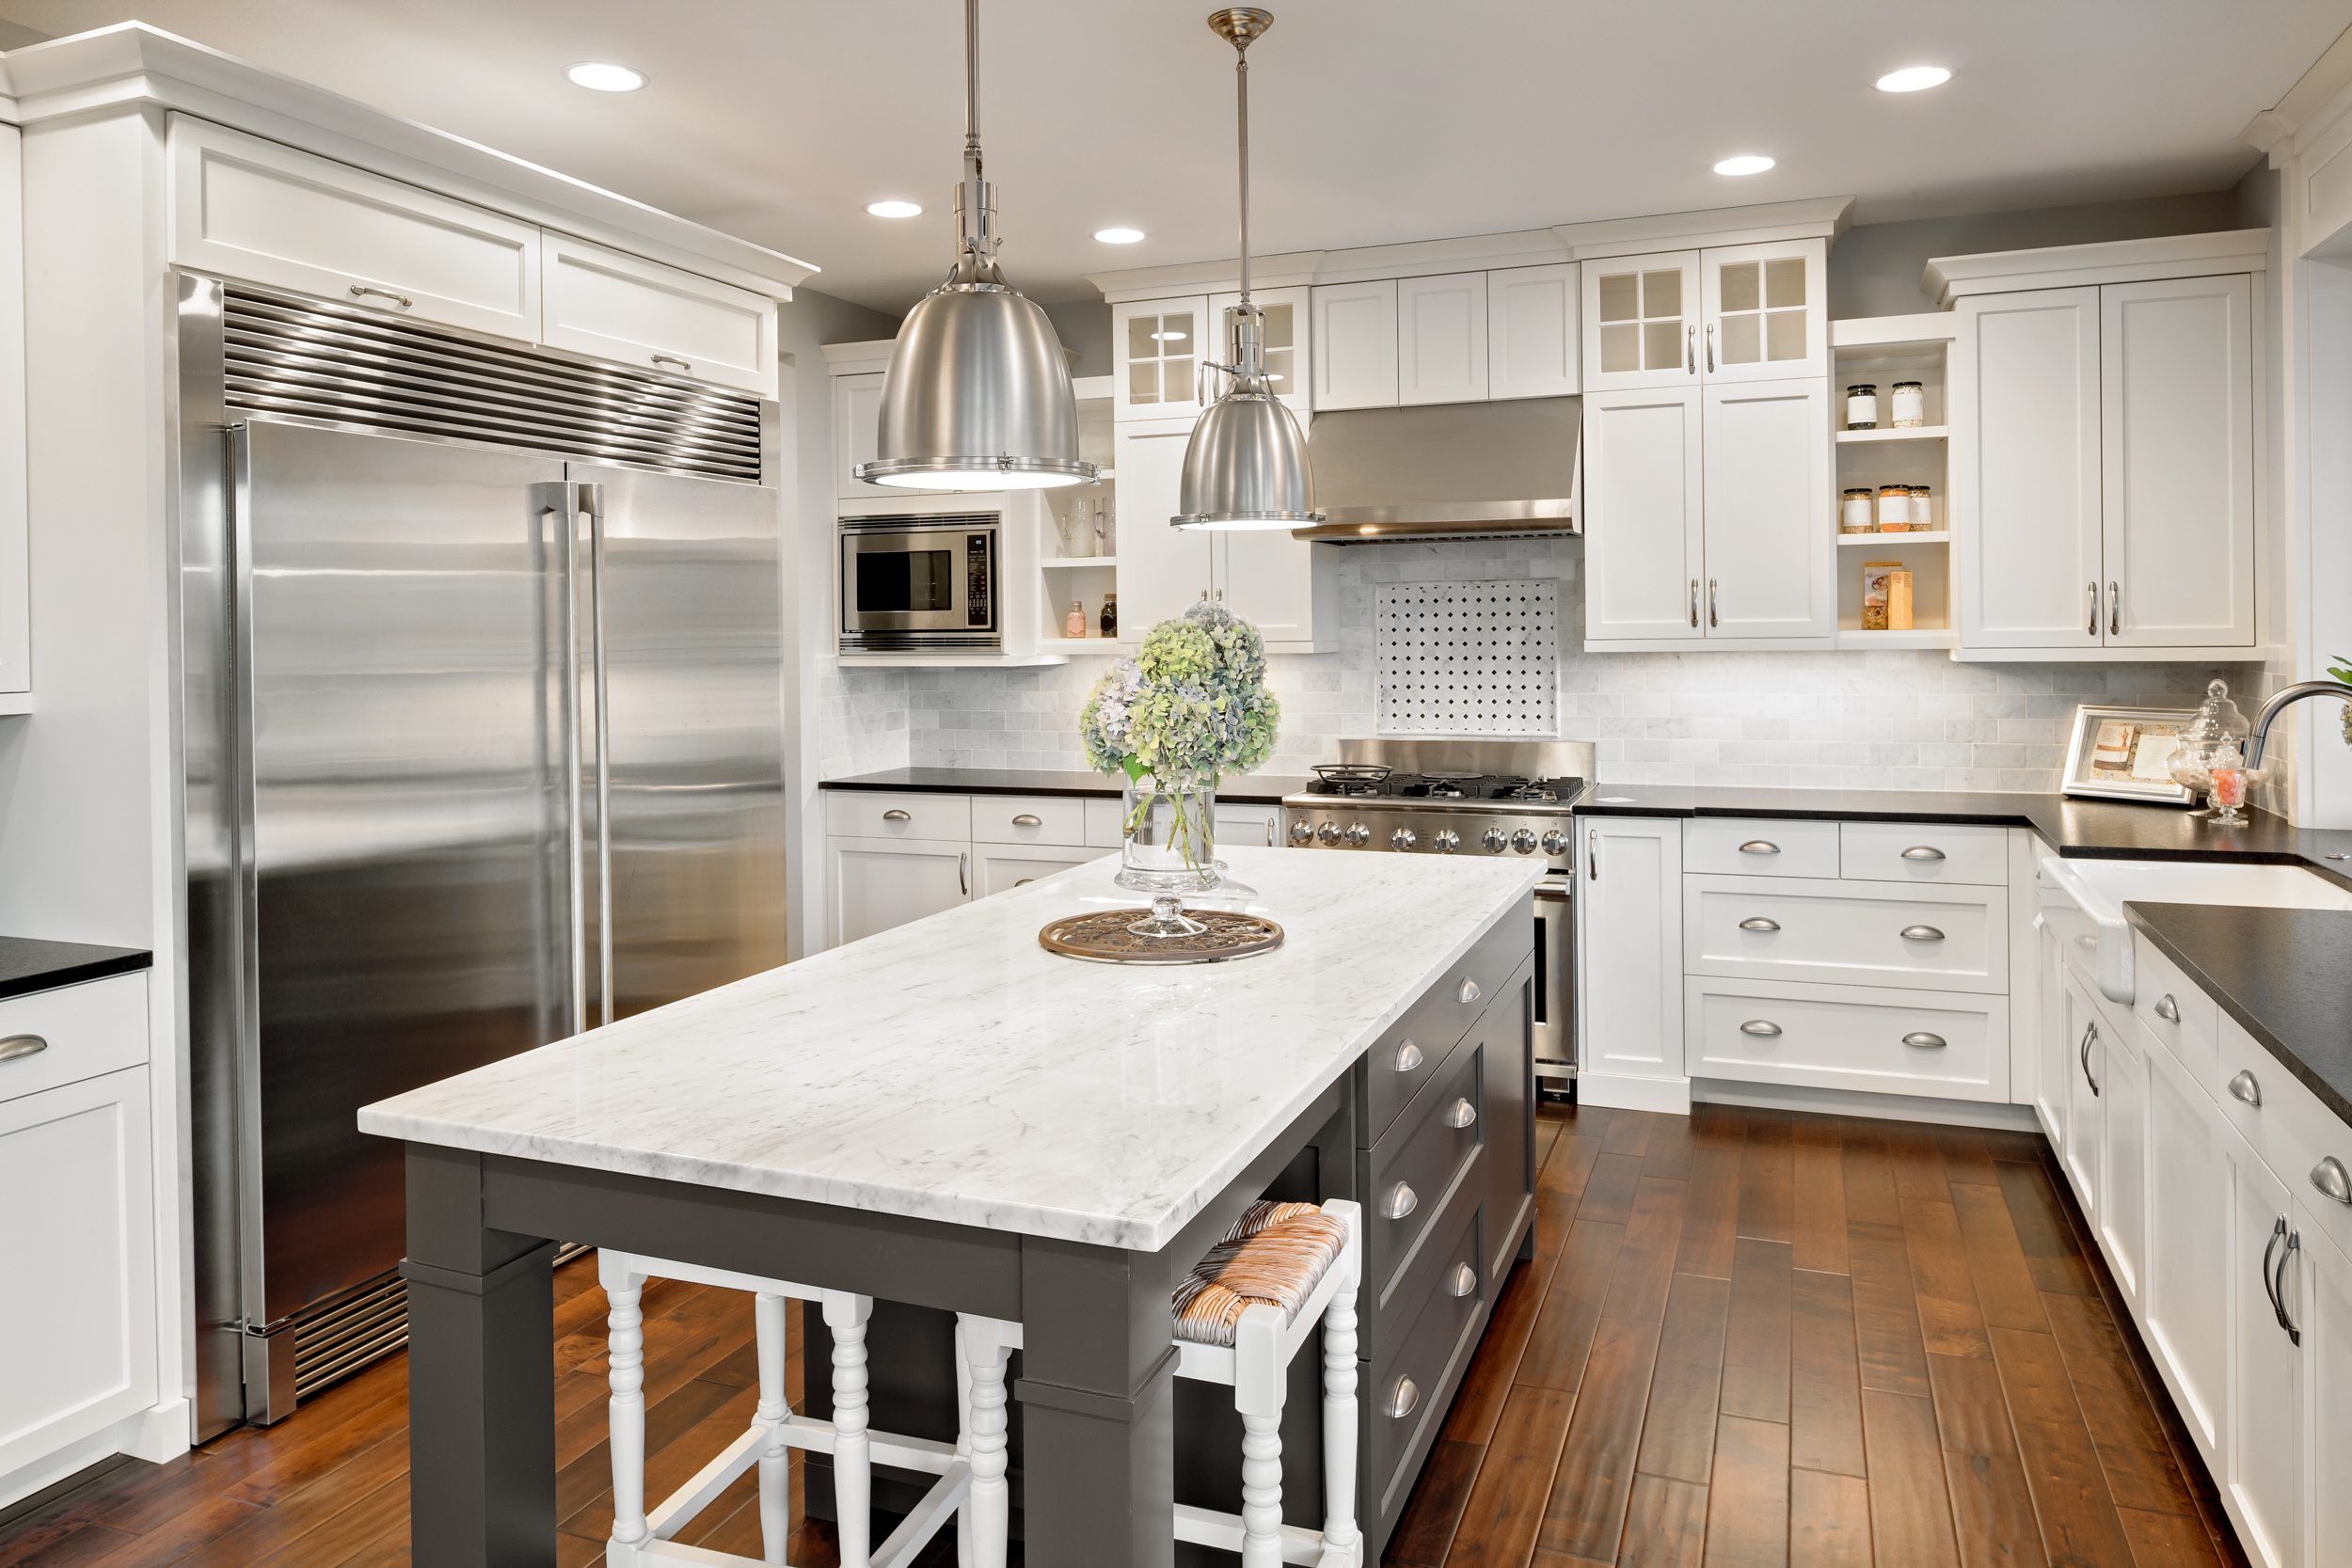 Call Select Floors For Alpharetta Kitchen Cabinet Refacing 770-218-3462